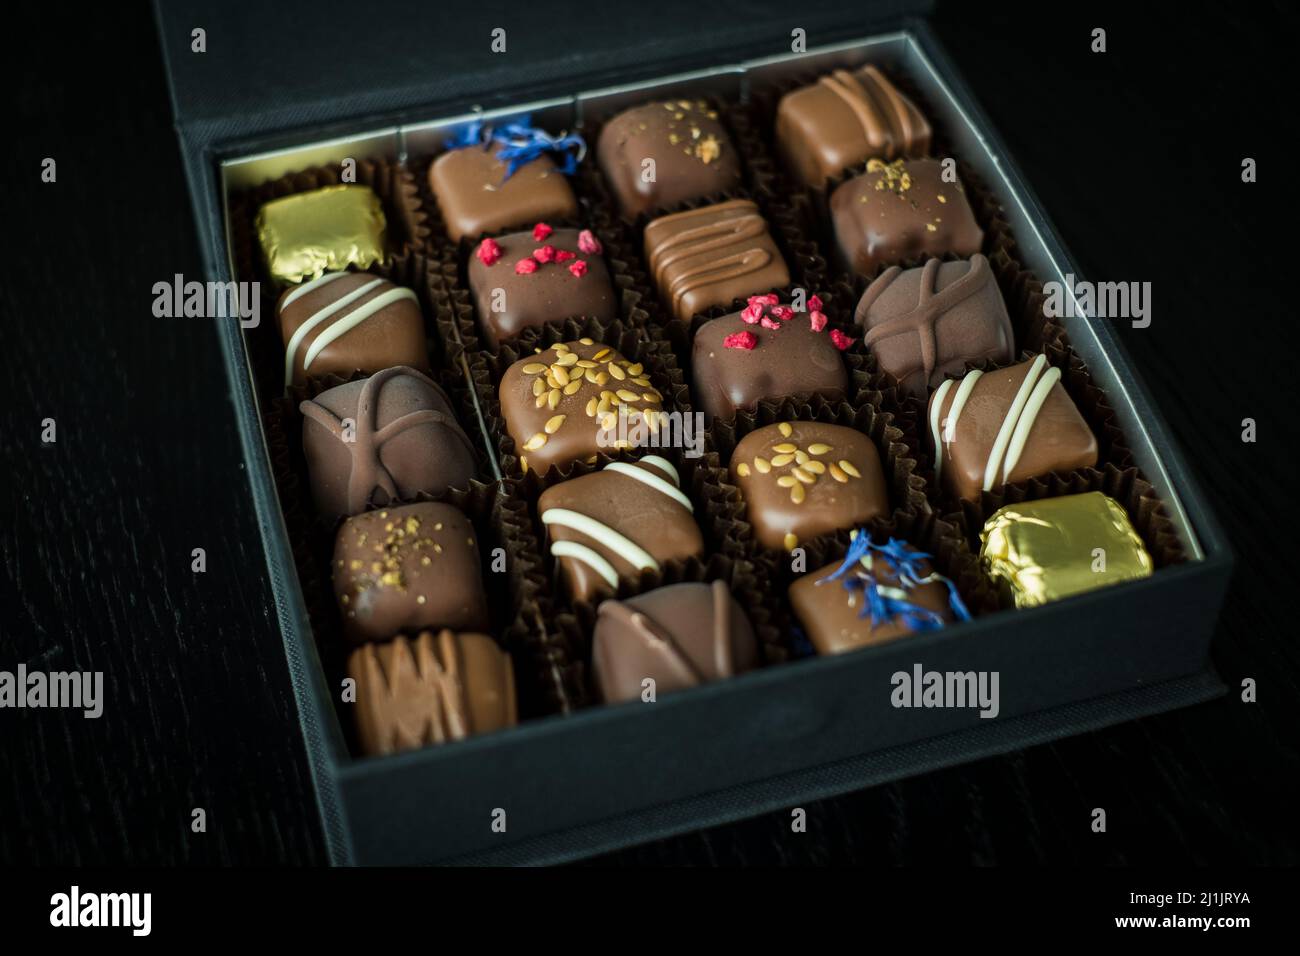 Box of delicious handmade chocolates. Stock Photo